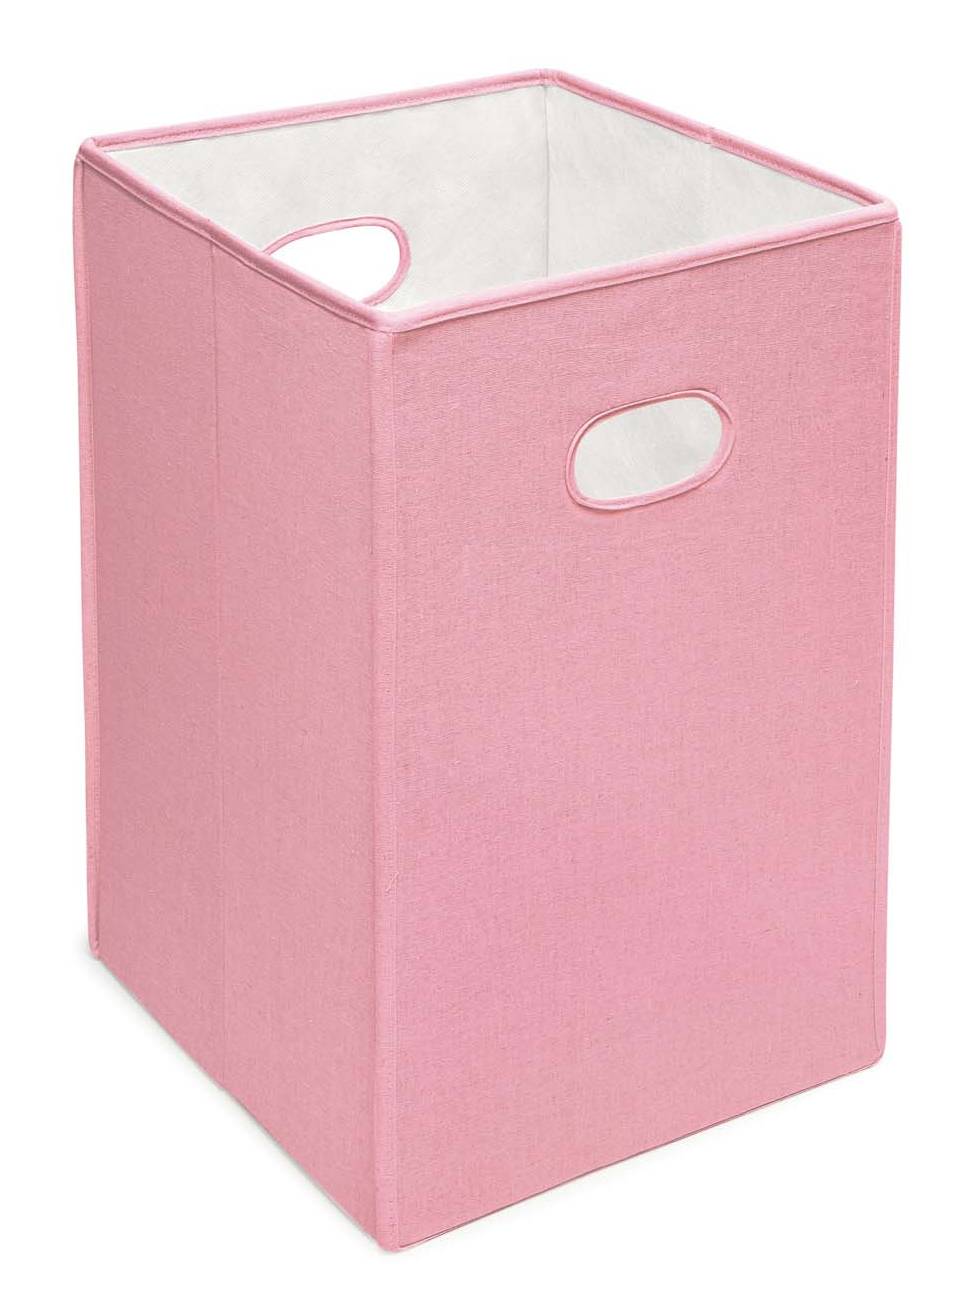 Folding Hamper Storage Bin - Pink